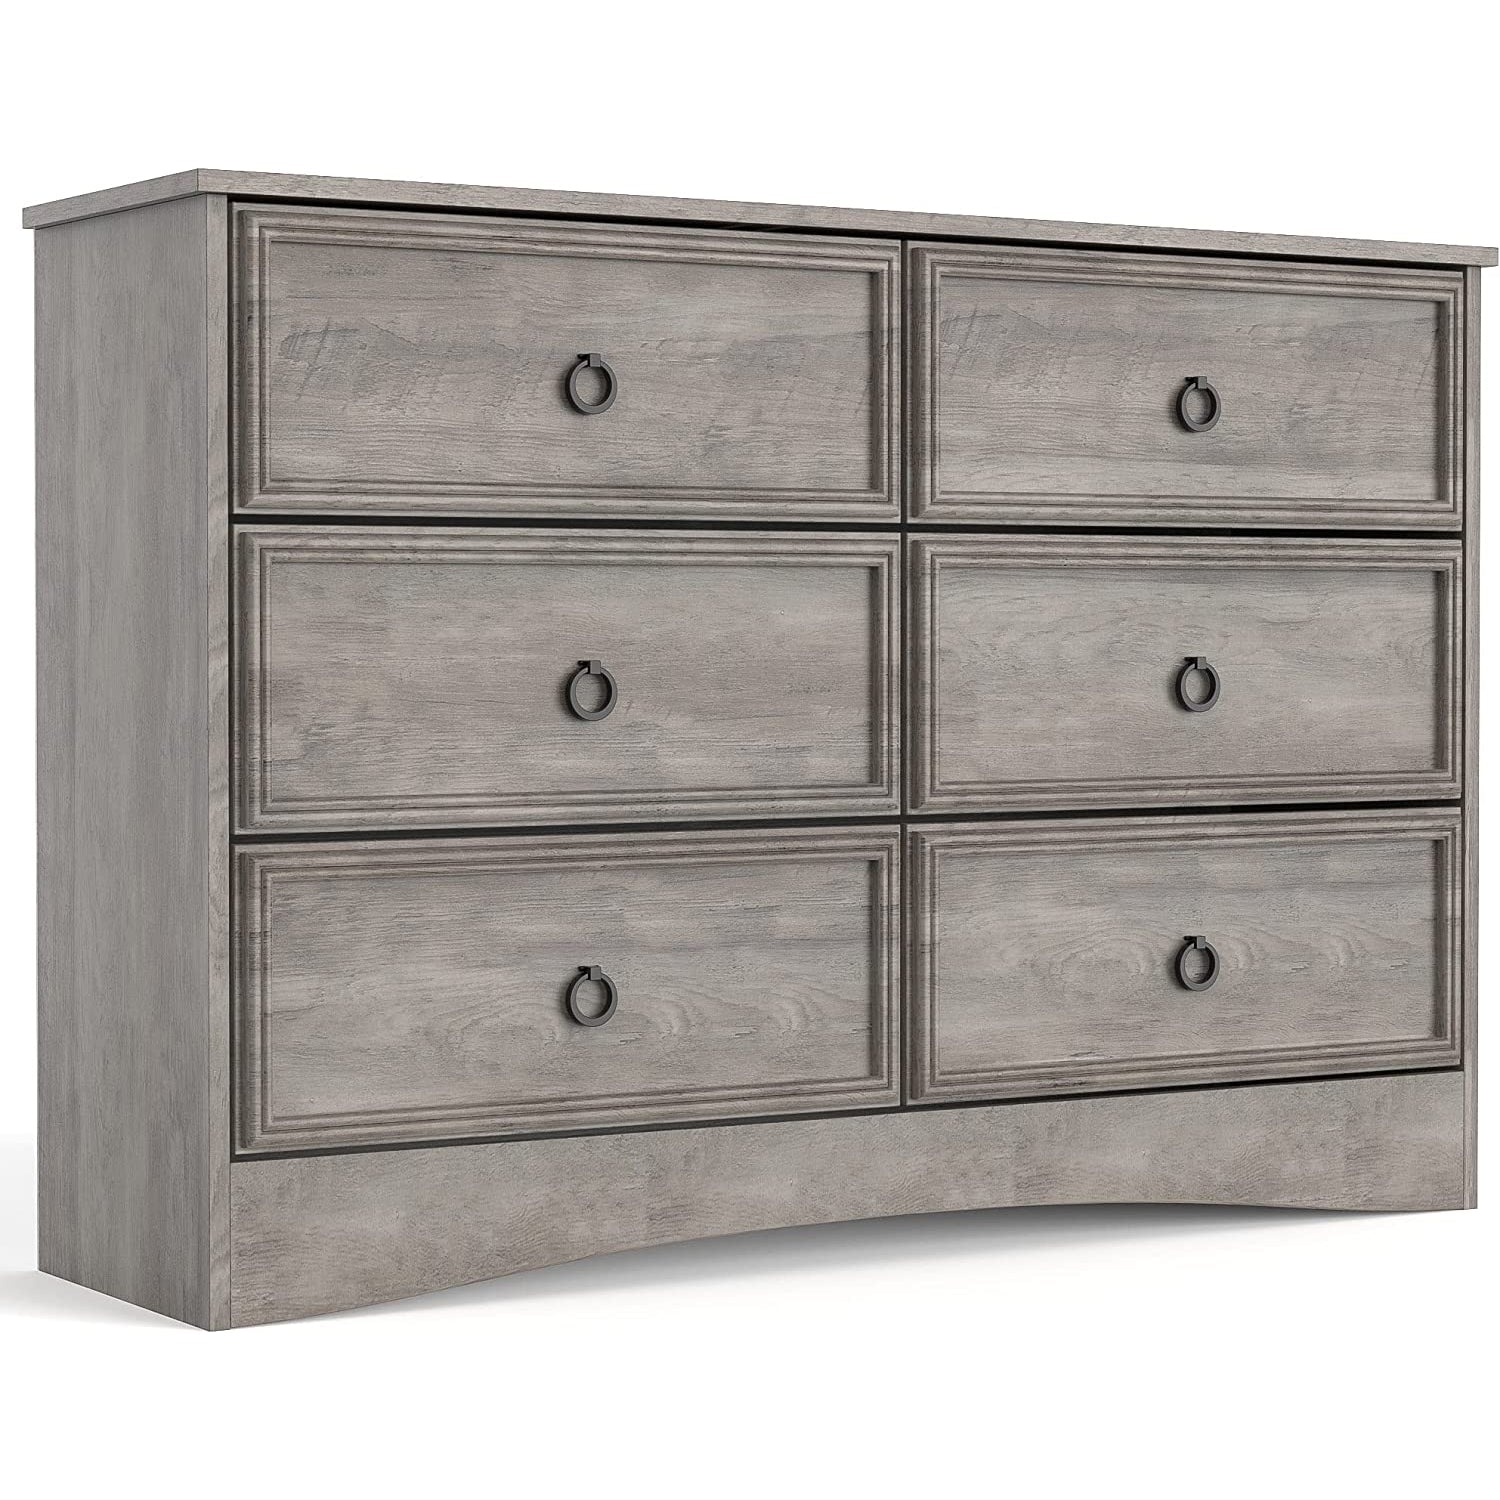 LGHM Large 6 Drawer Dresser Grey